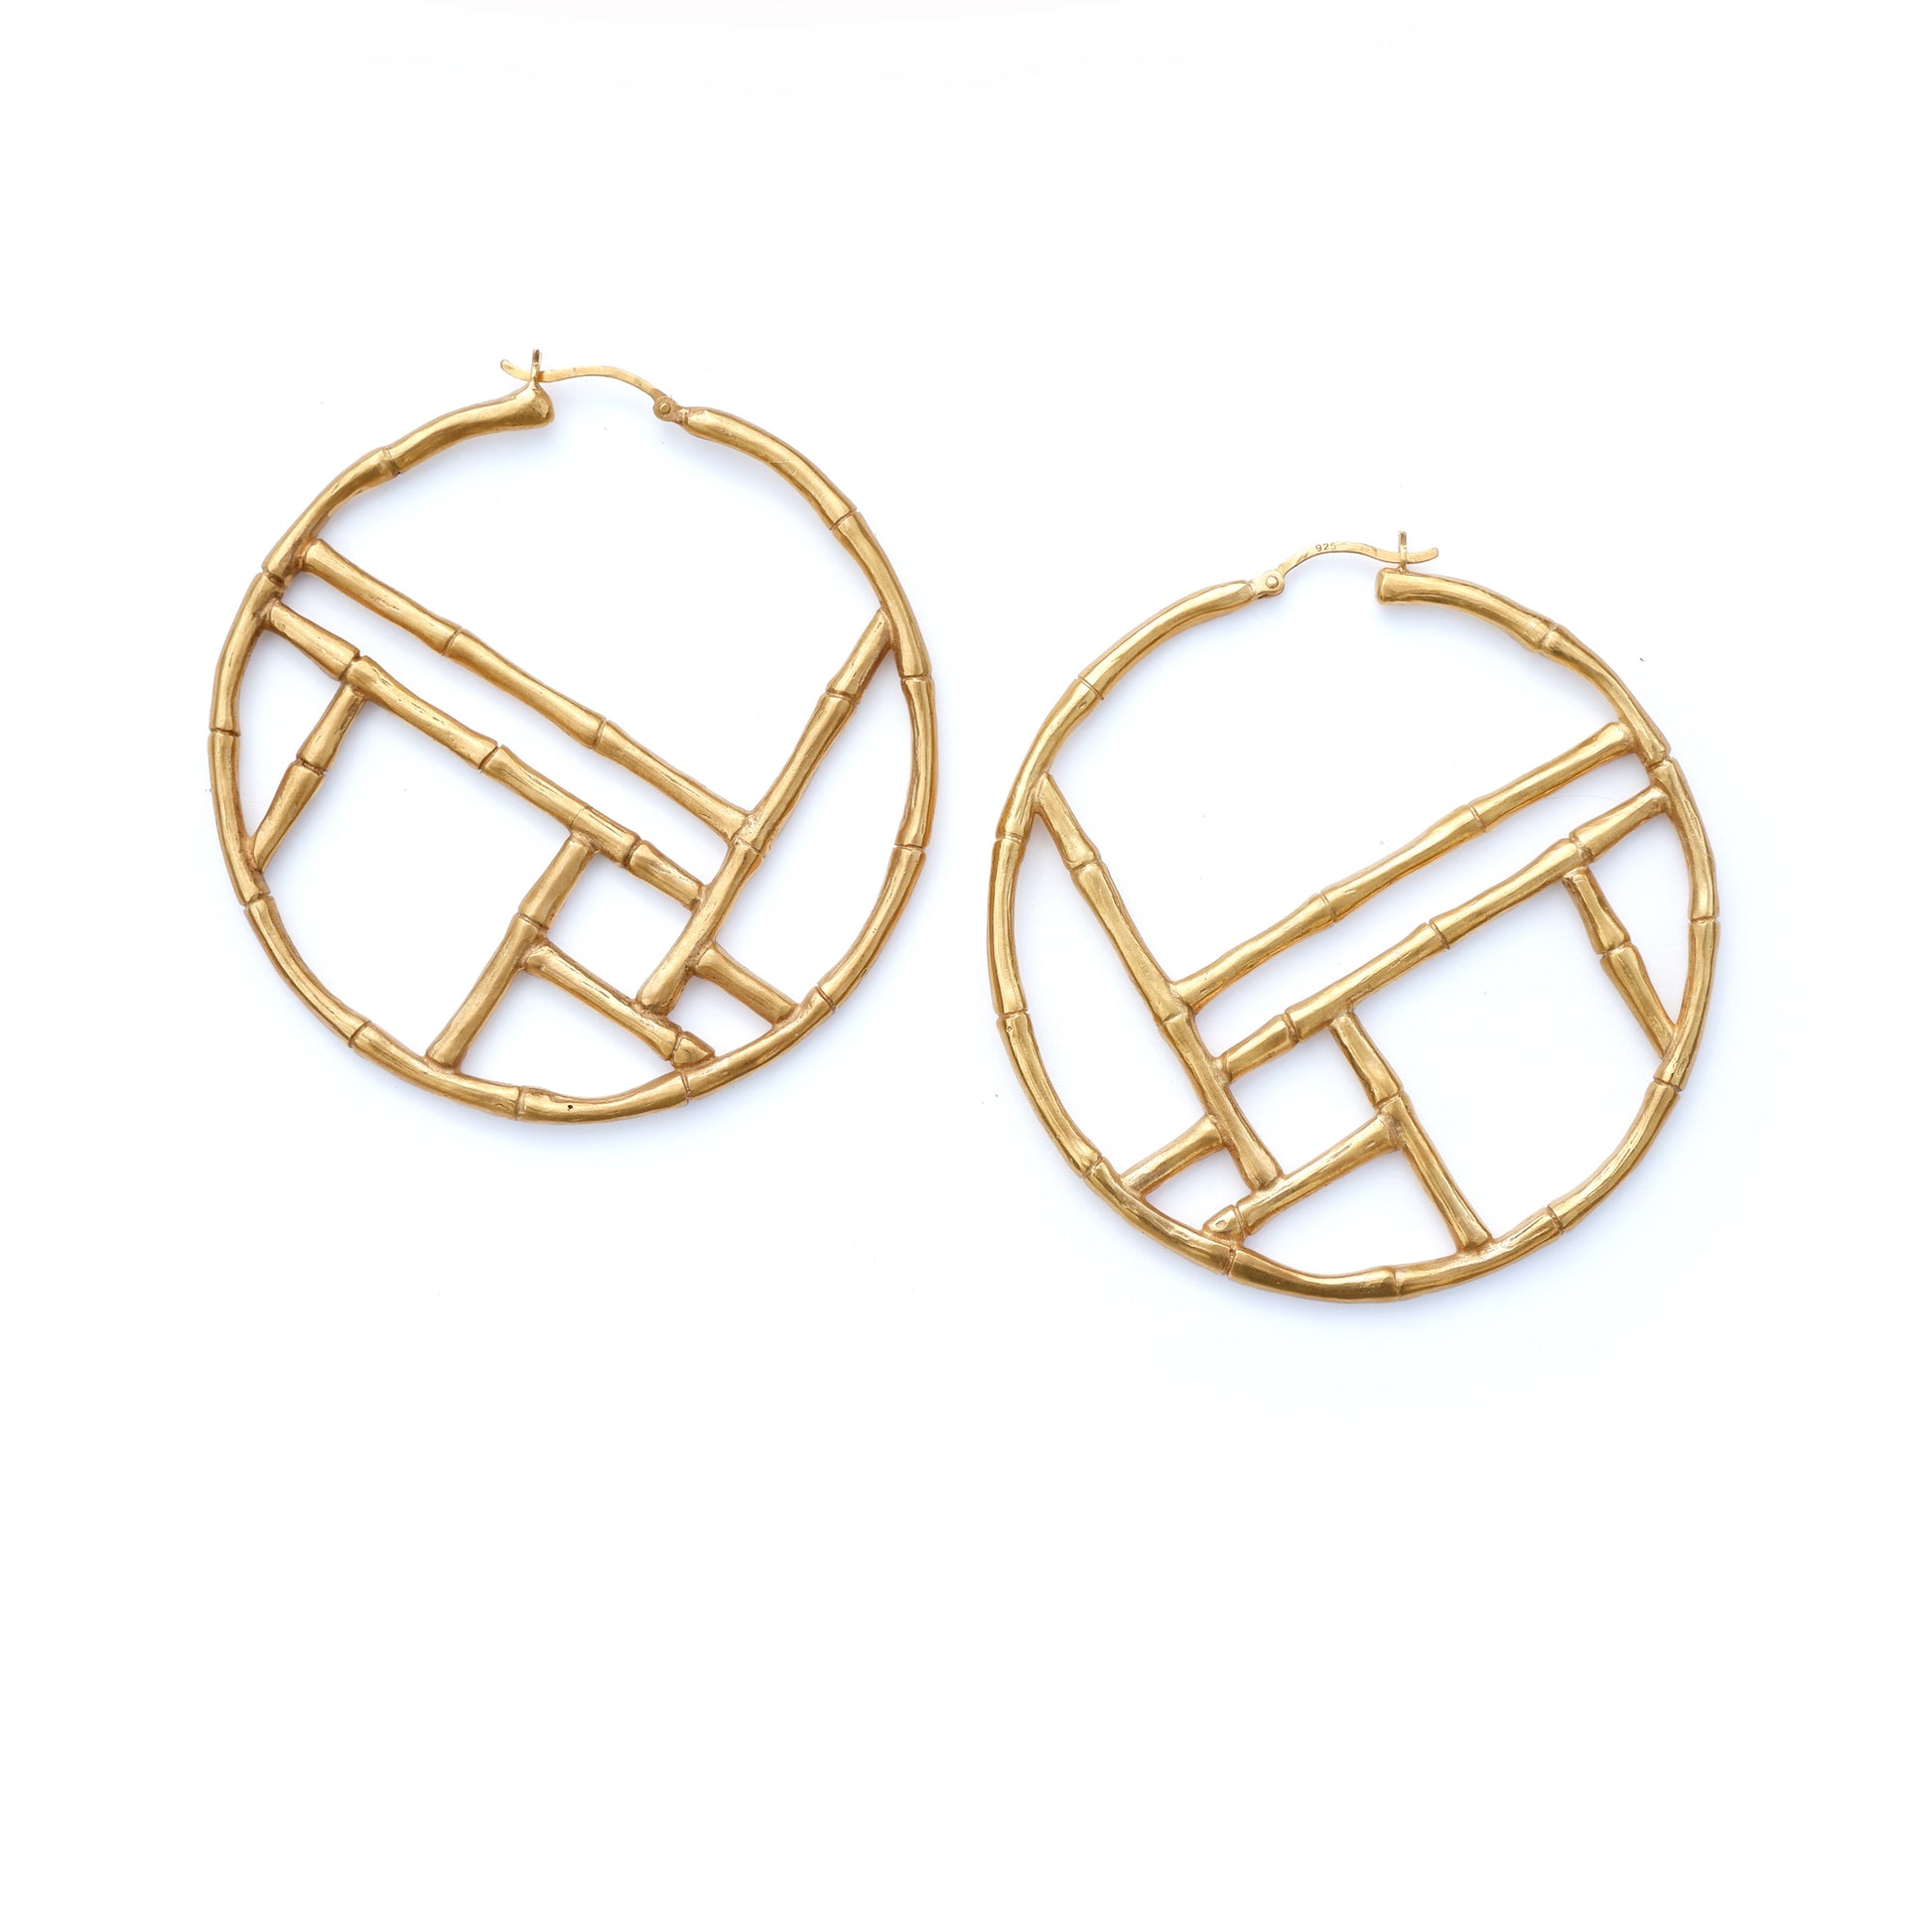 Gold Vermeil Large, Bamboo Hoops, cross bar design,  statement earrings